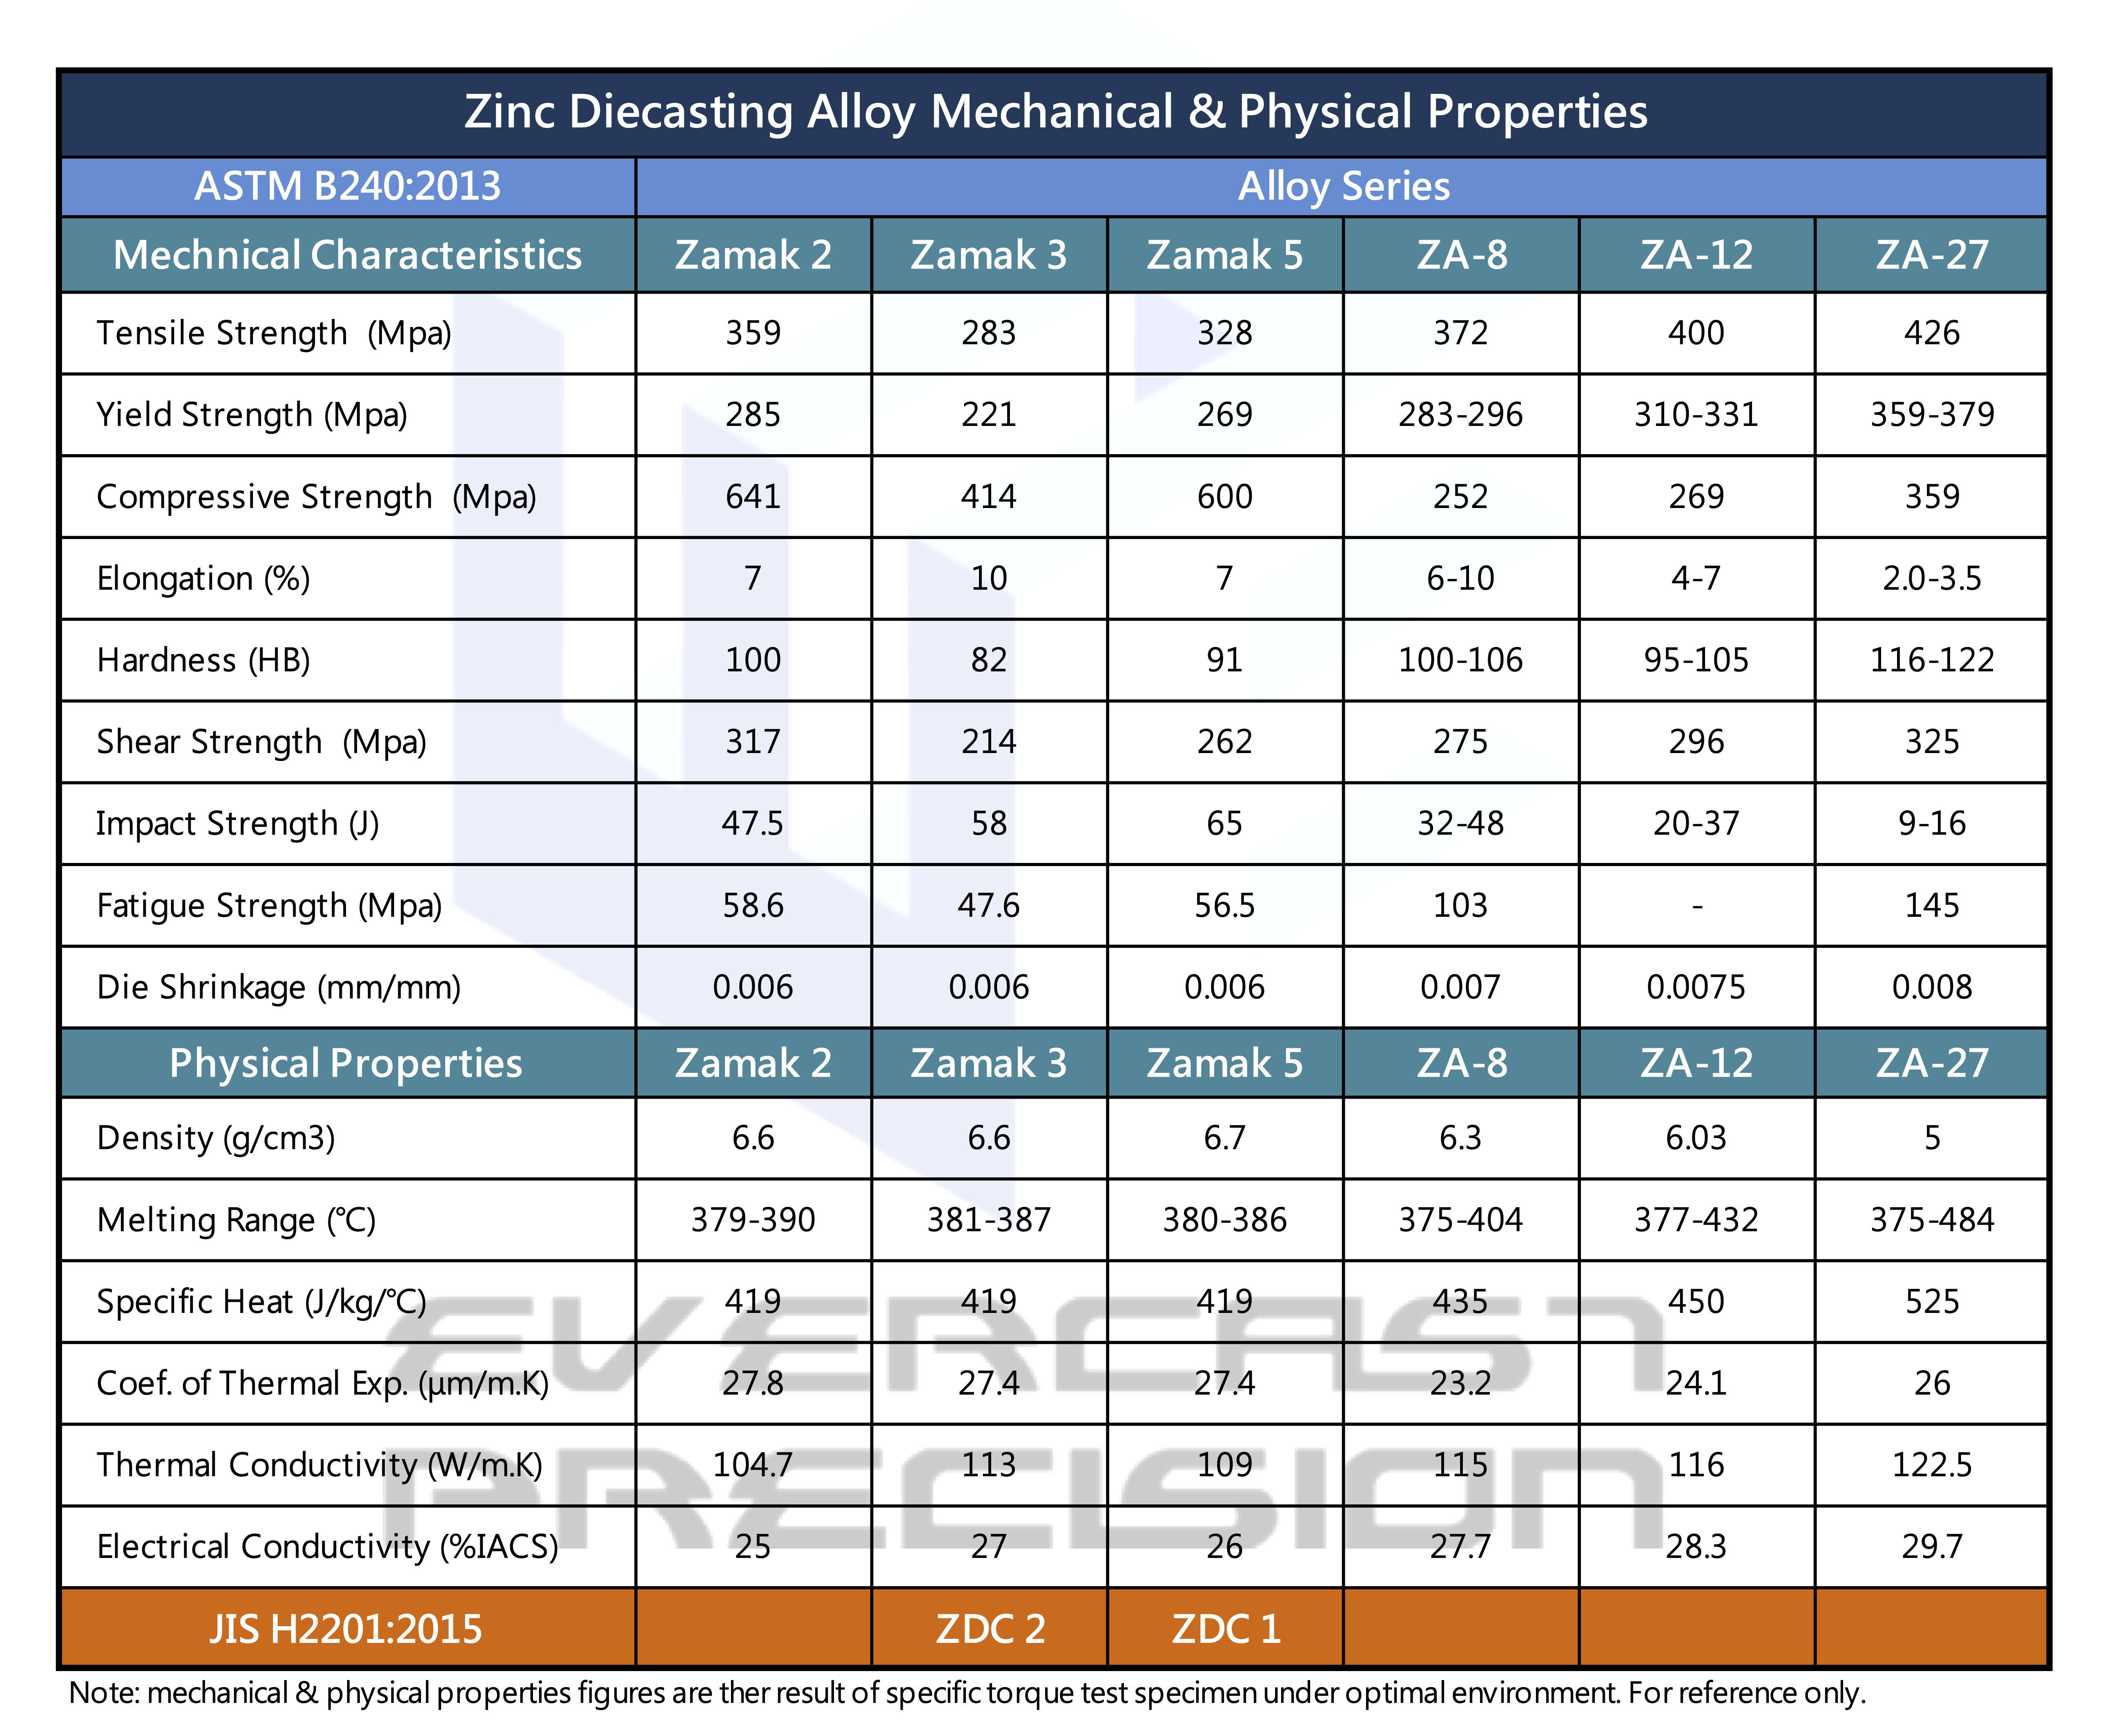 Zinc Diecasting Alloy Mechanical & Physical Properties